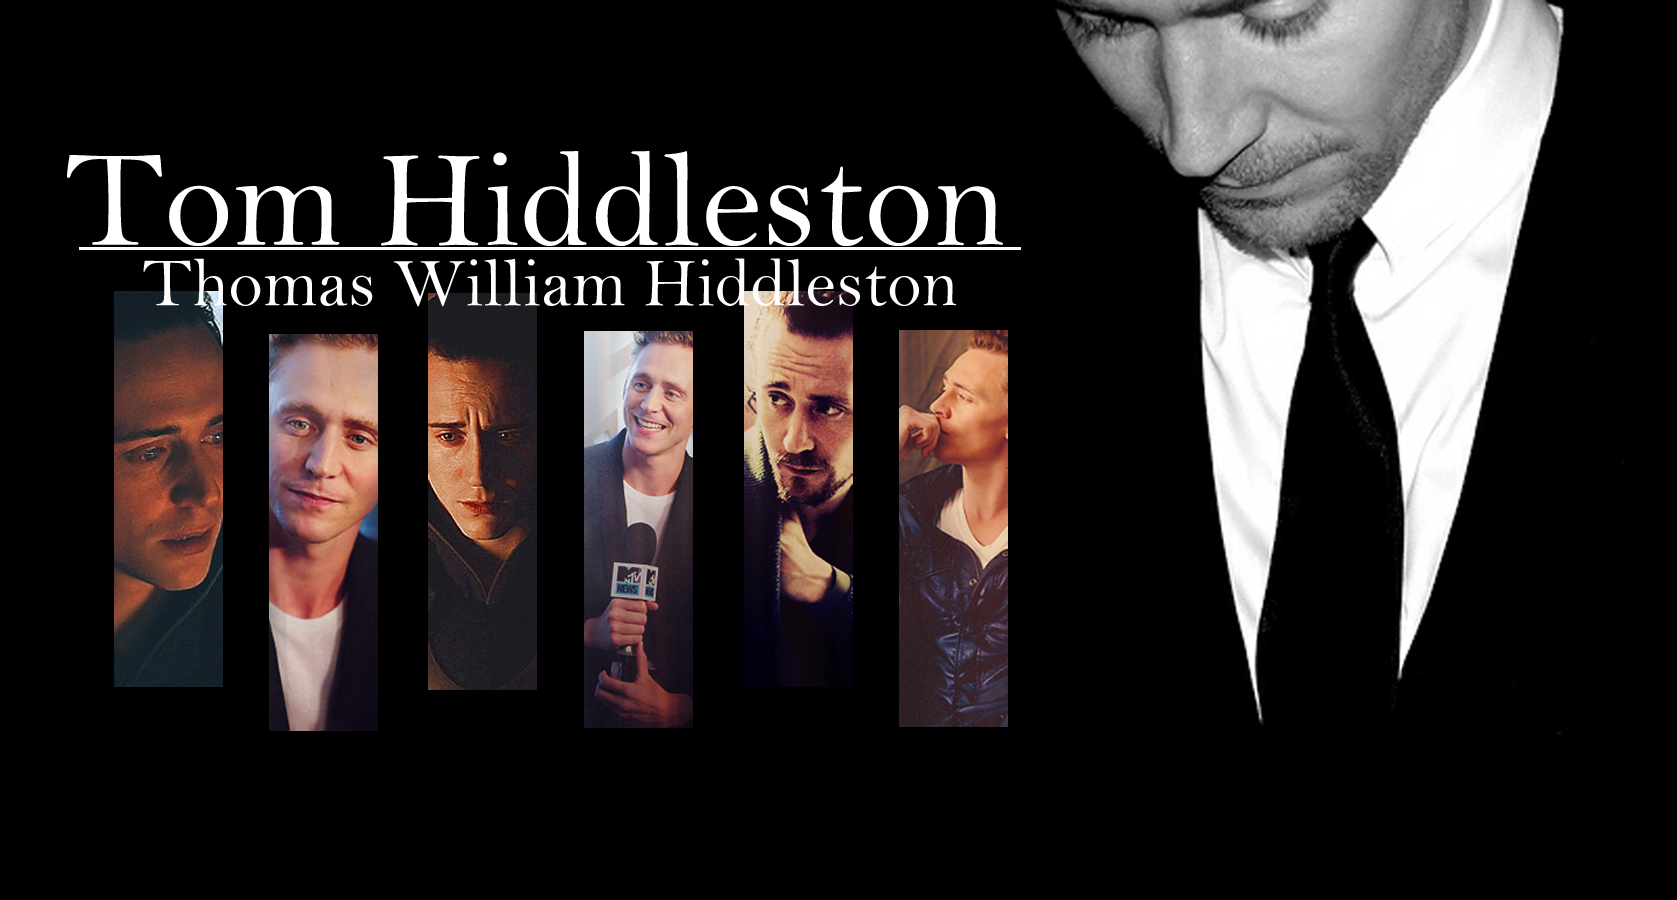 Tom Hiddleston Wallpaper Hd Tom hiddleston